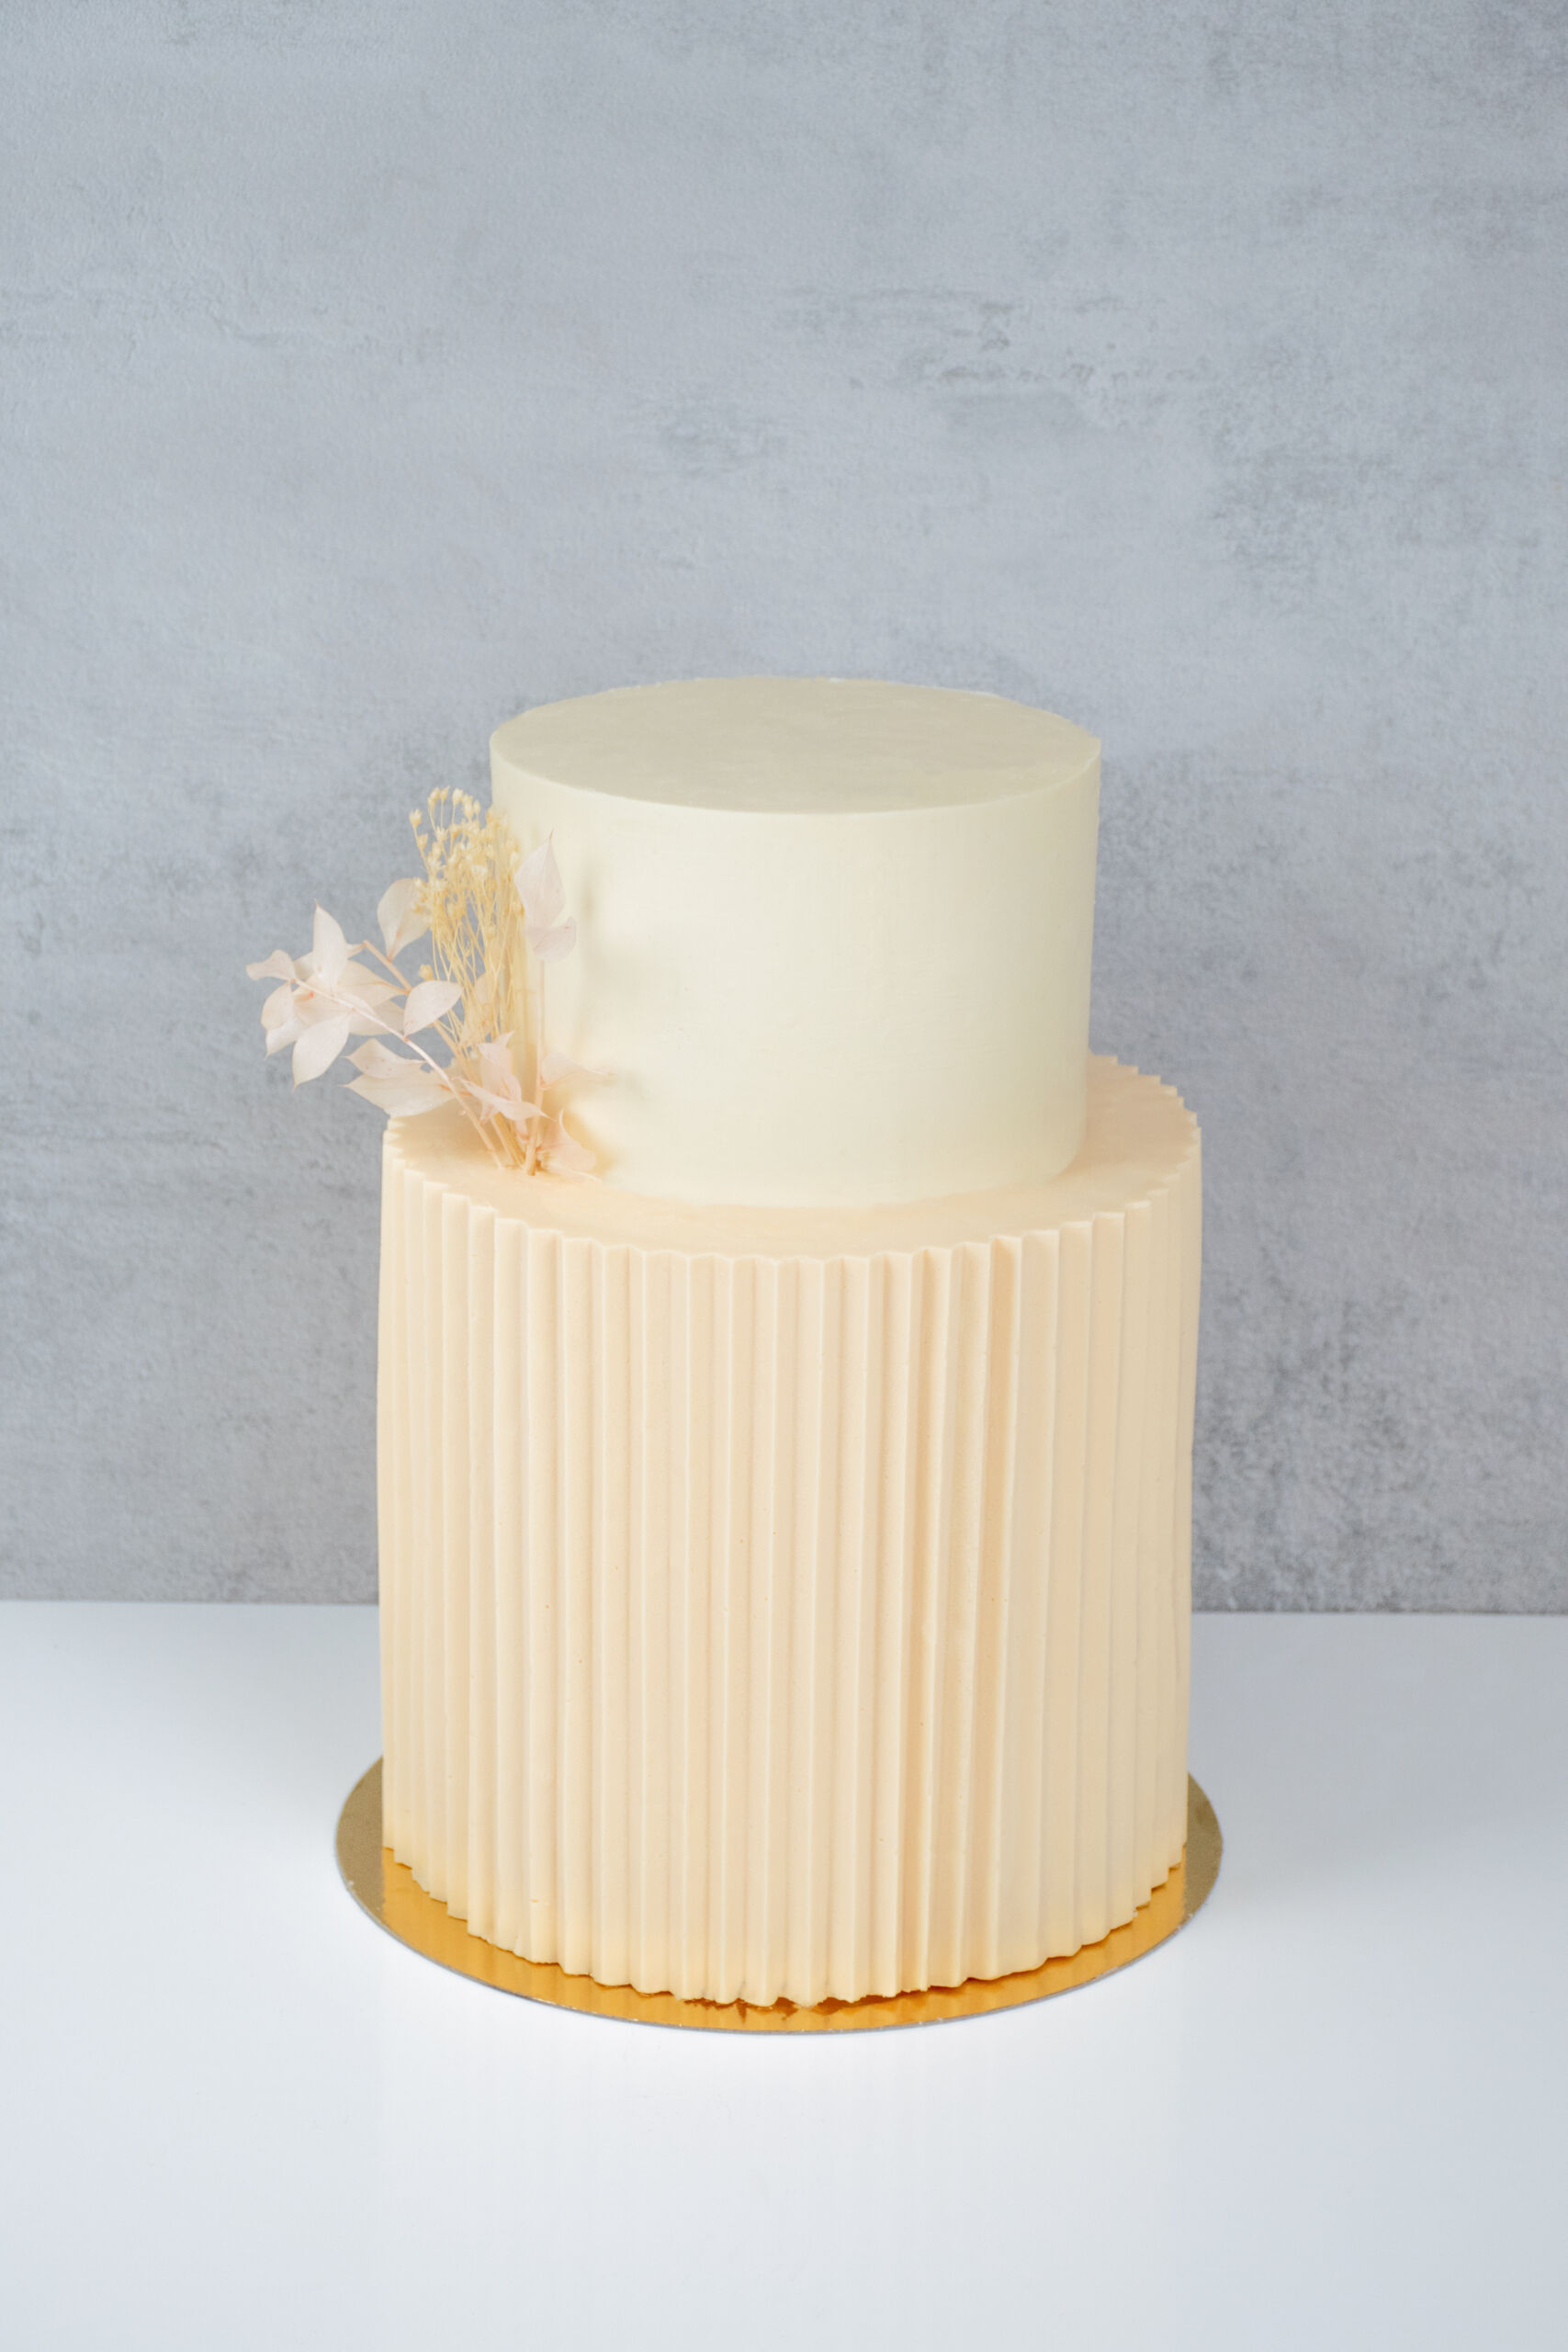 Gâteau personnalisé cake design mariage